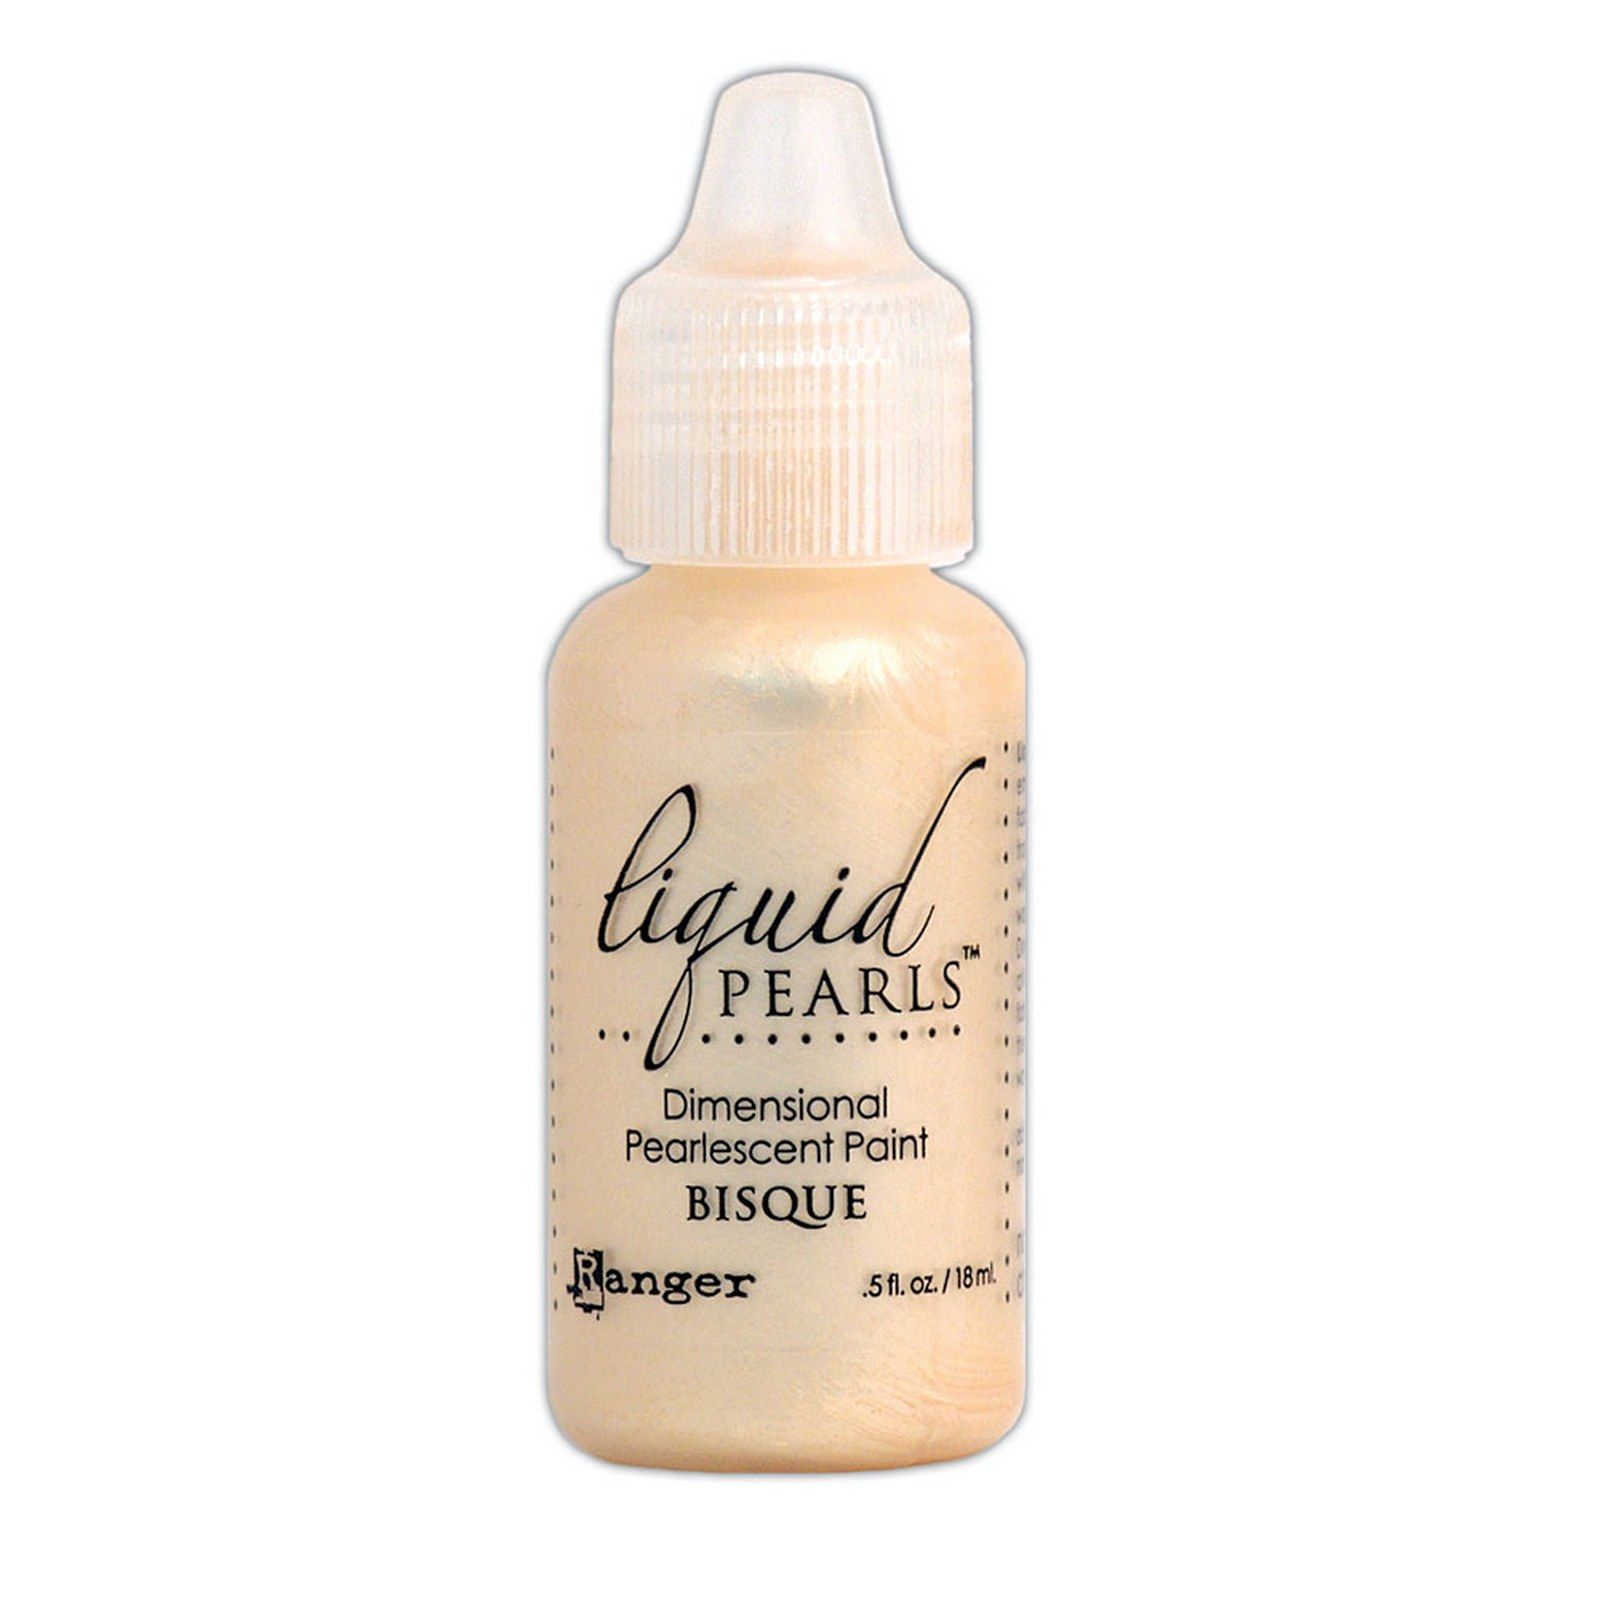 Ranger • Liquid pearls 14gr Bisque